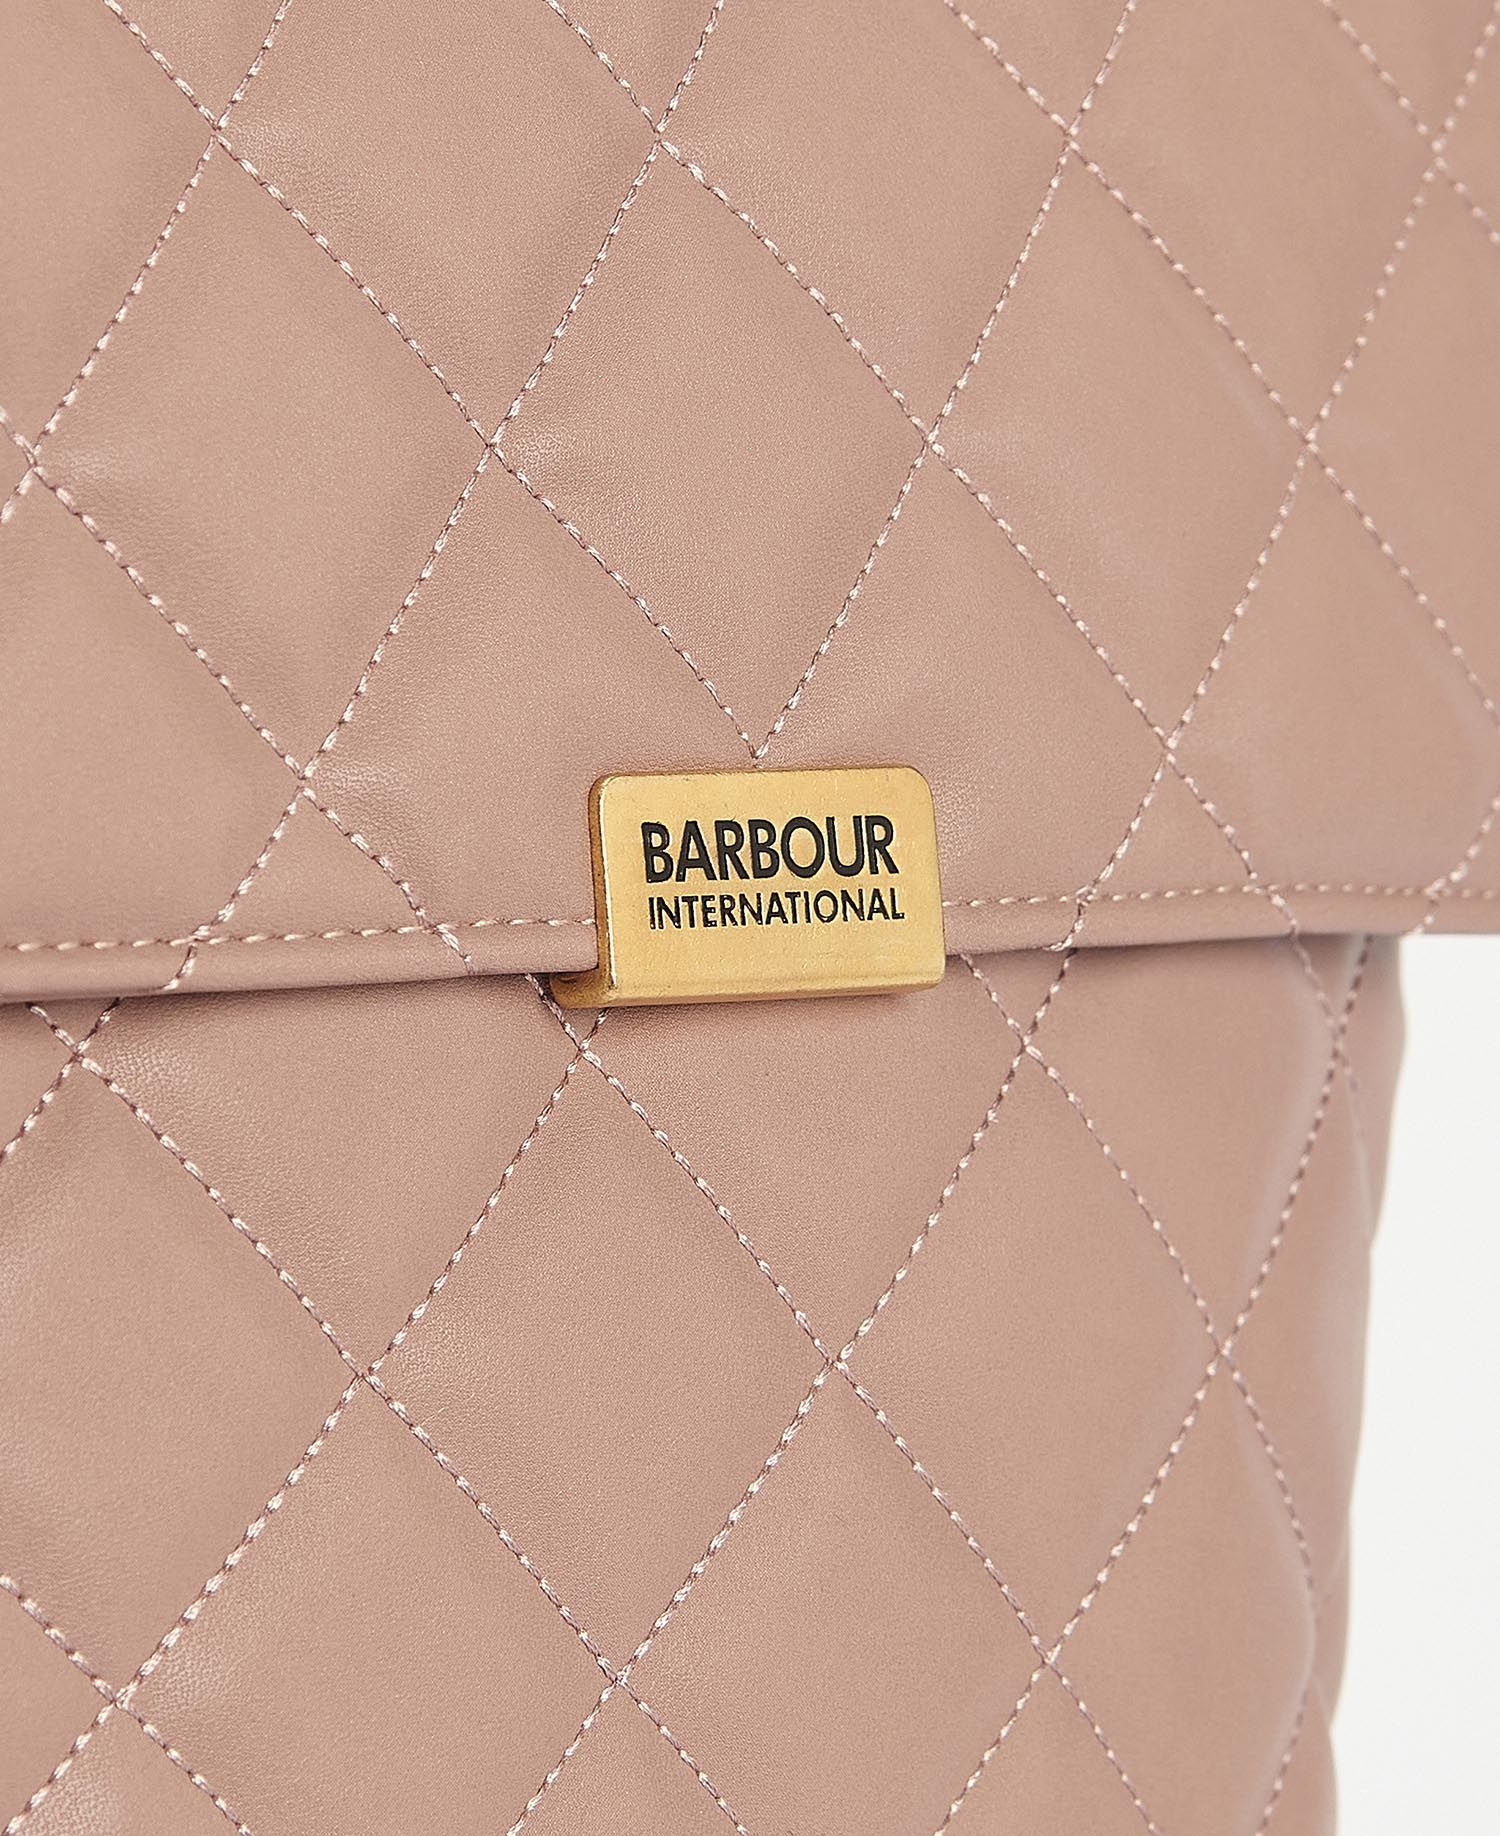 Barbour International Hoxton Backpack - Camel